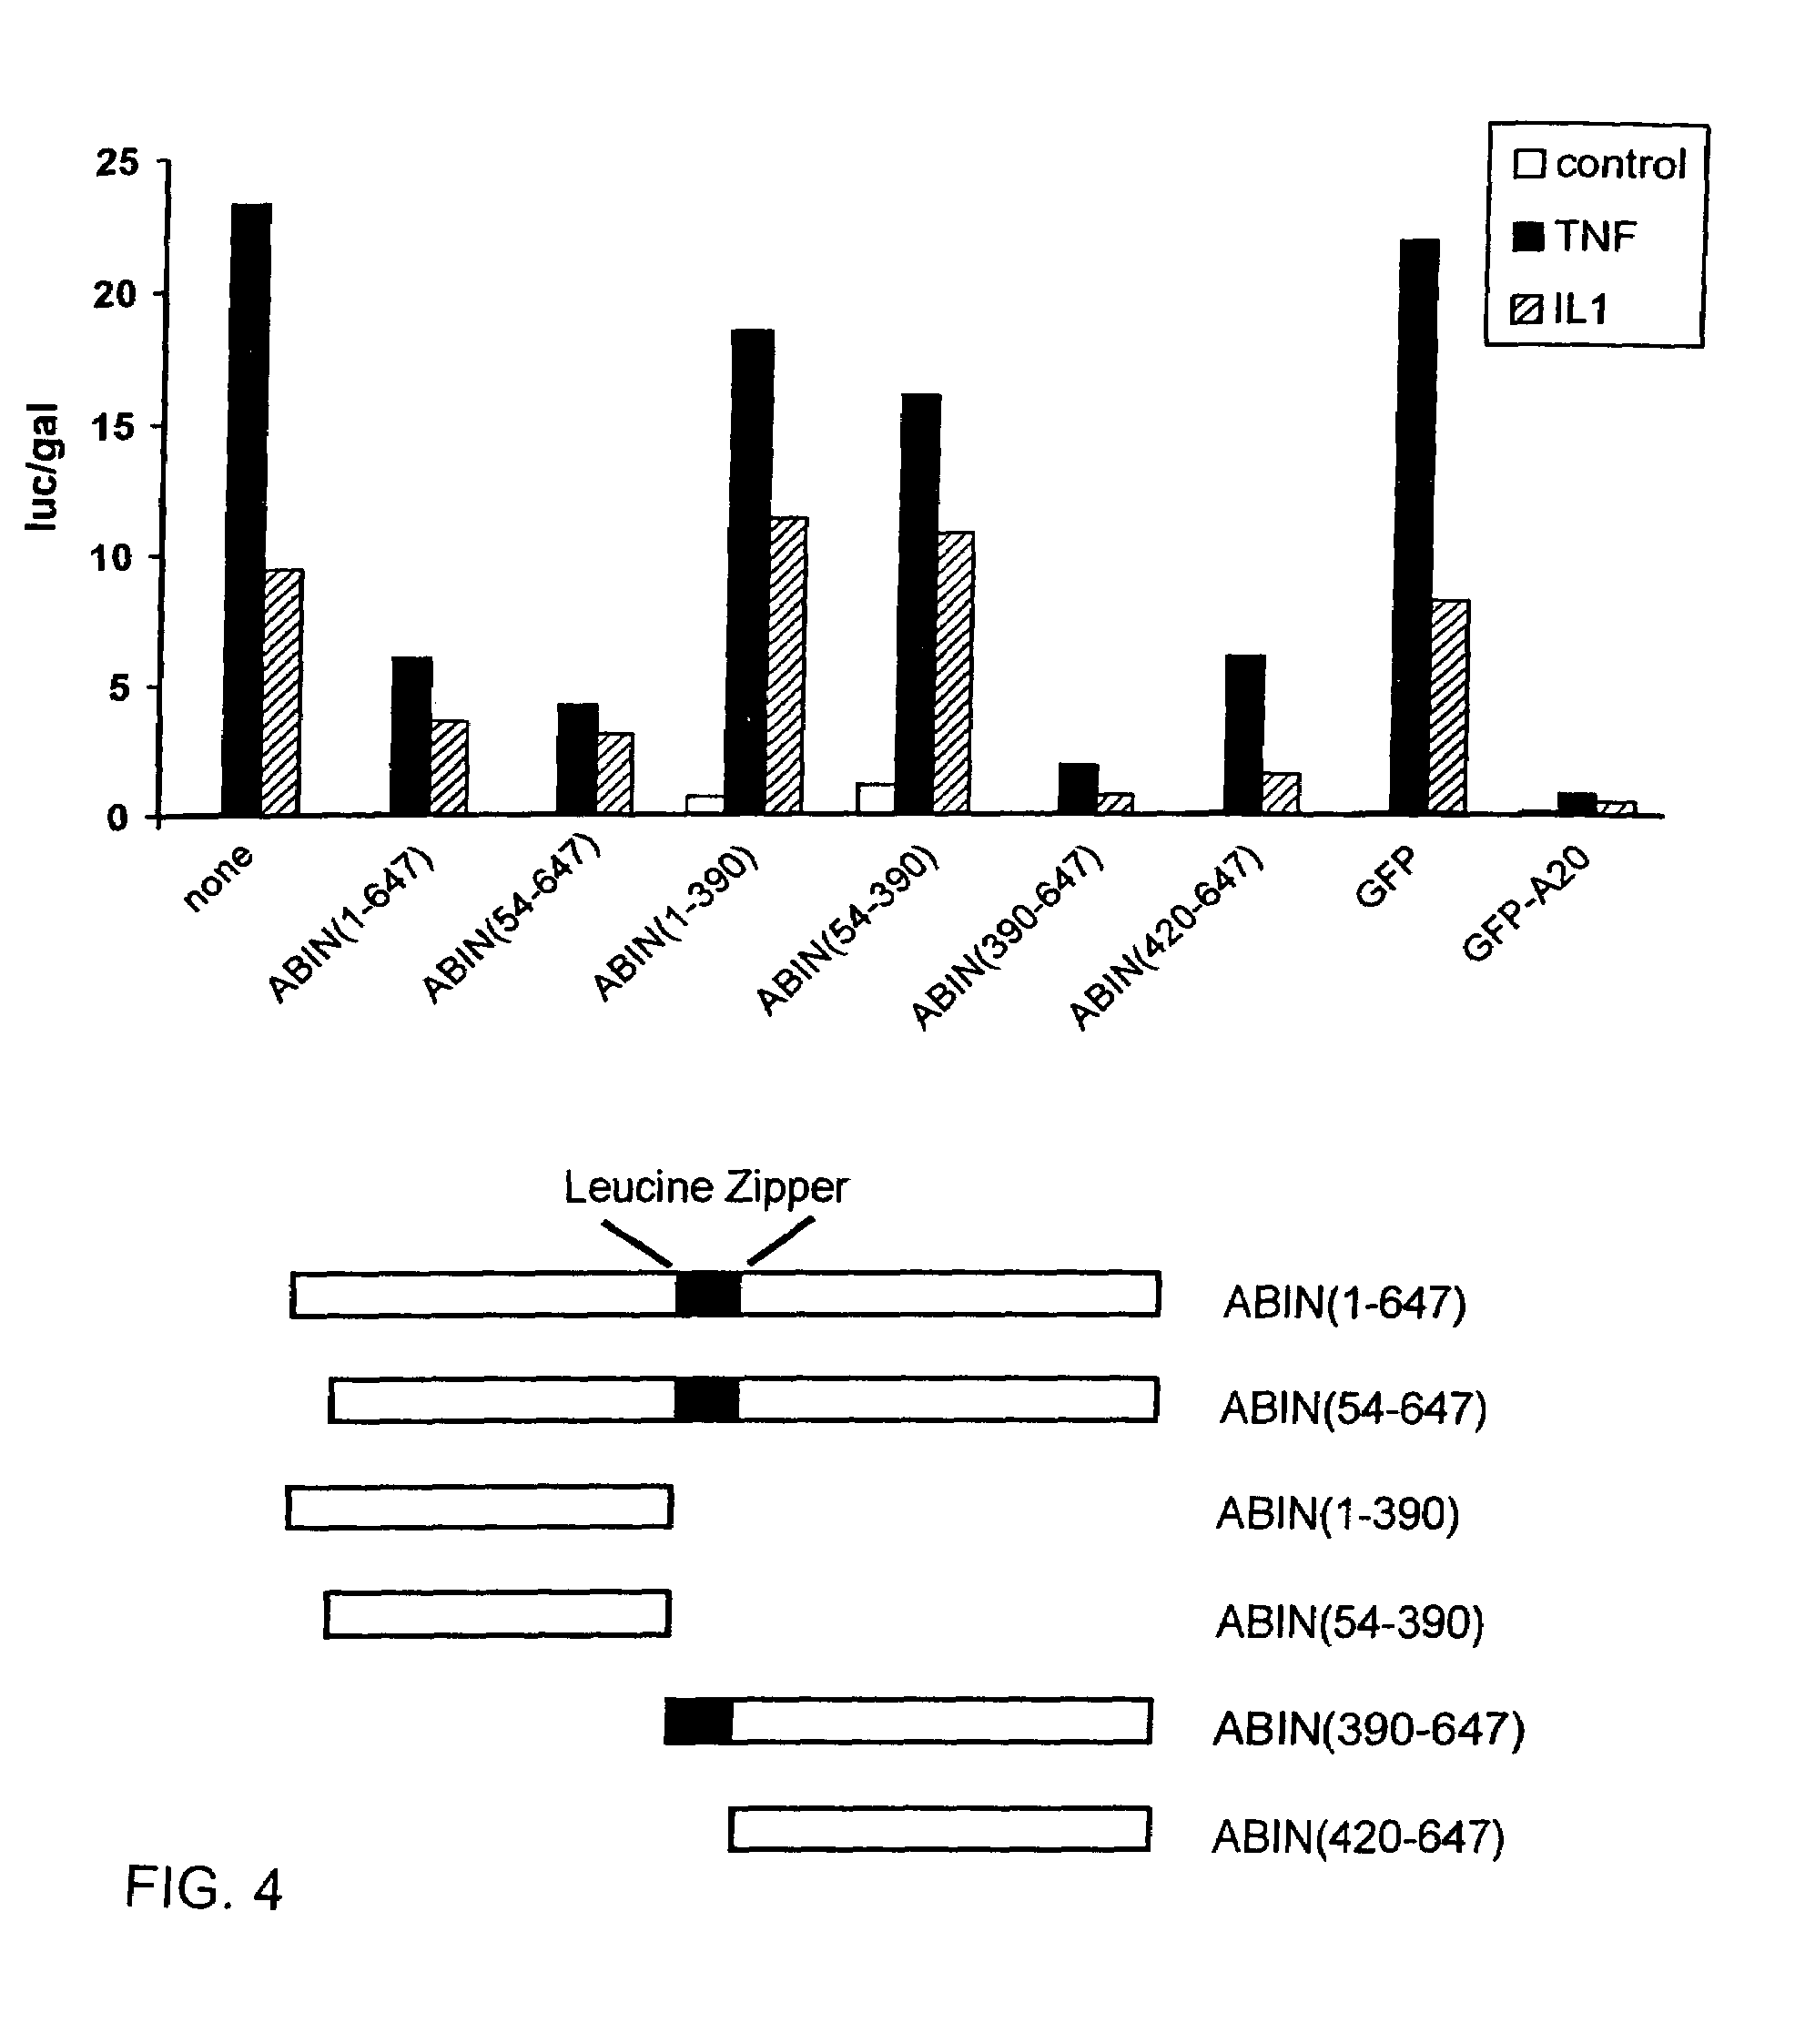 Inhibitors of NF-kappaB activation